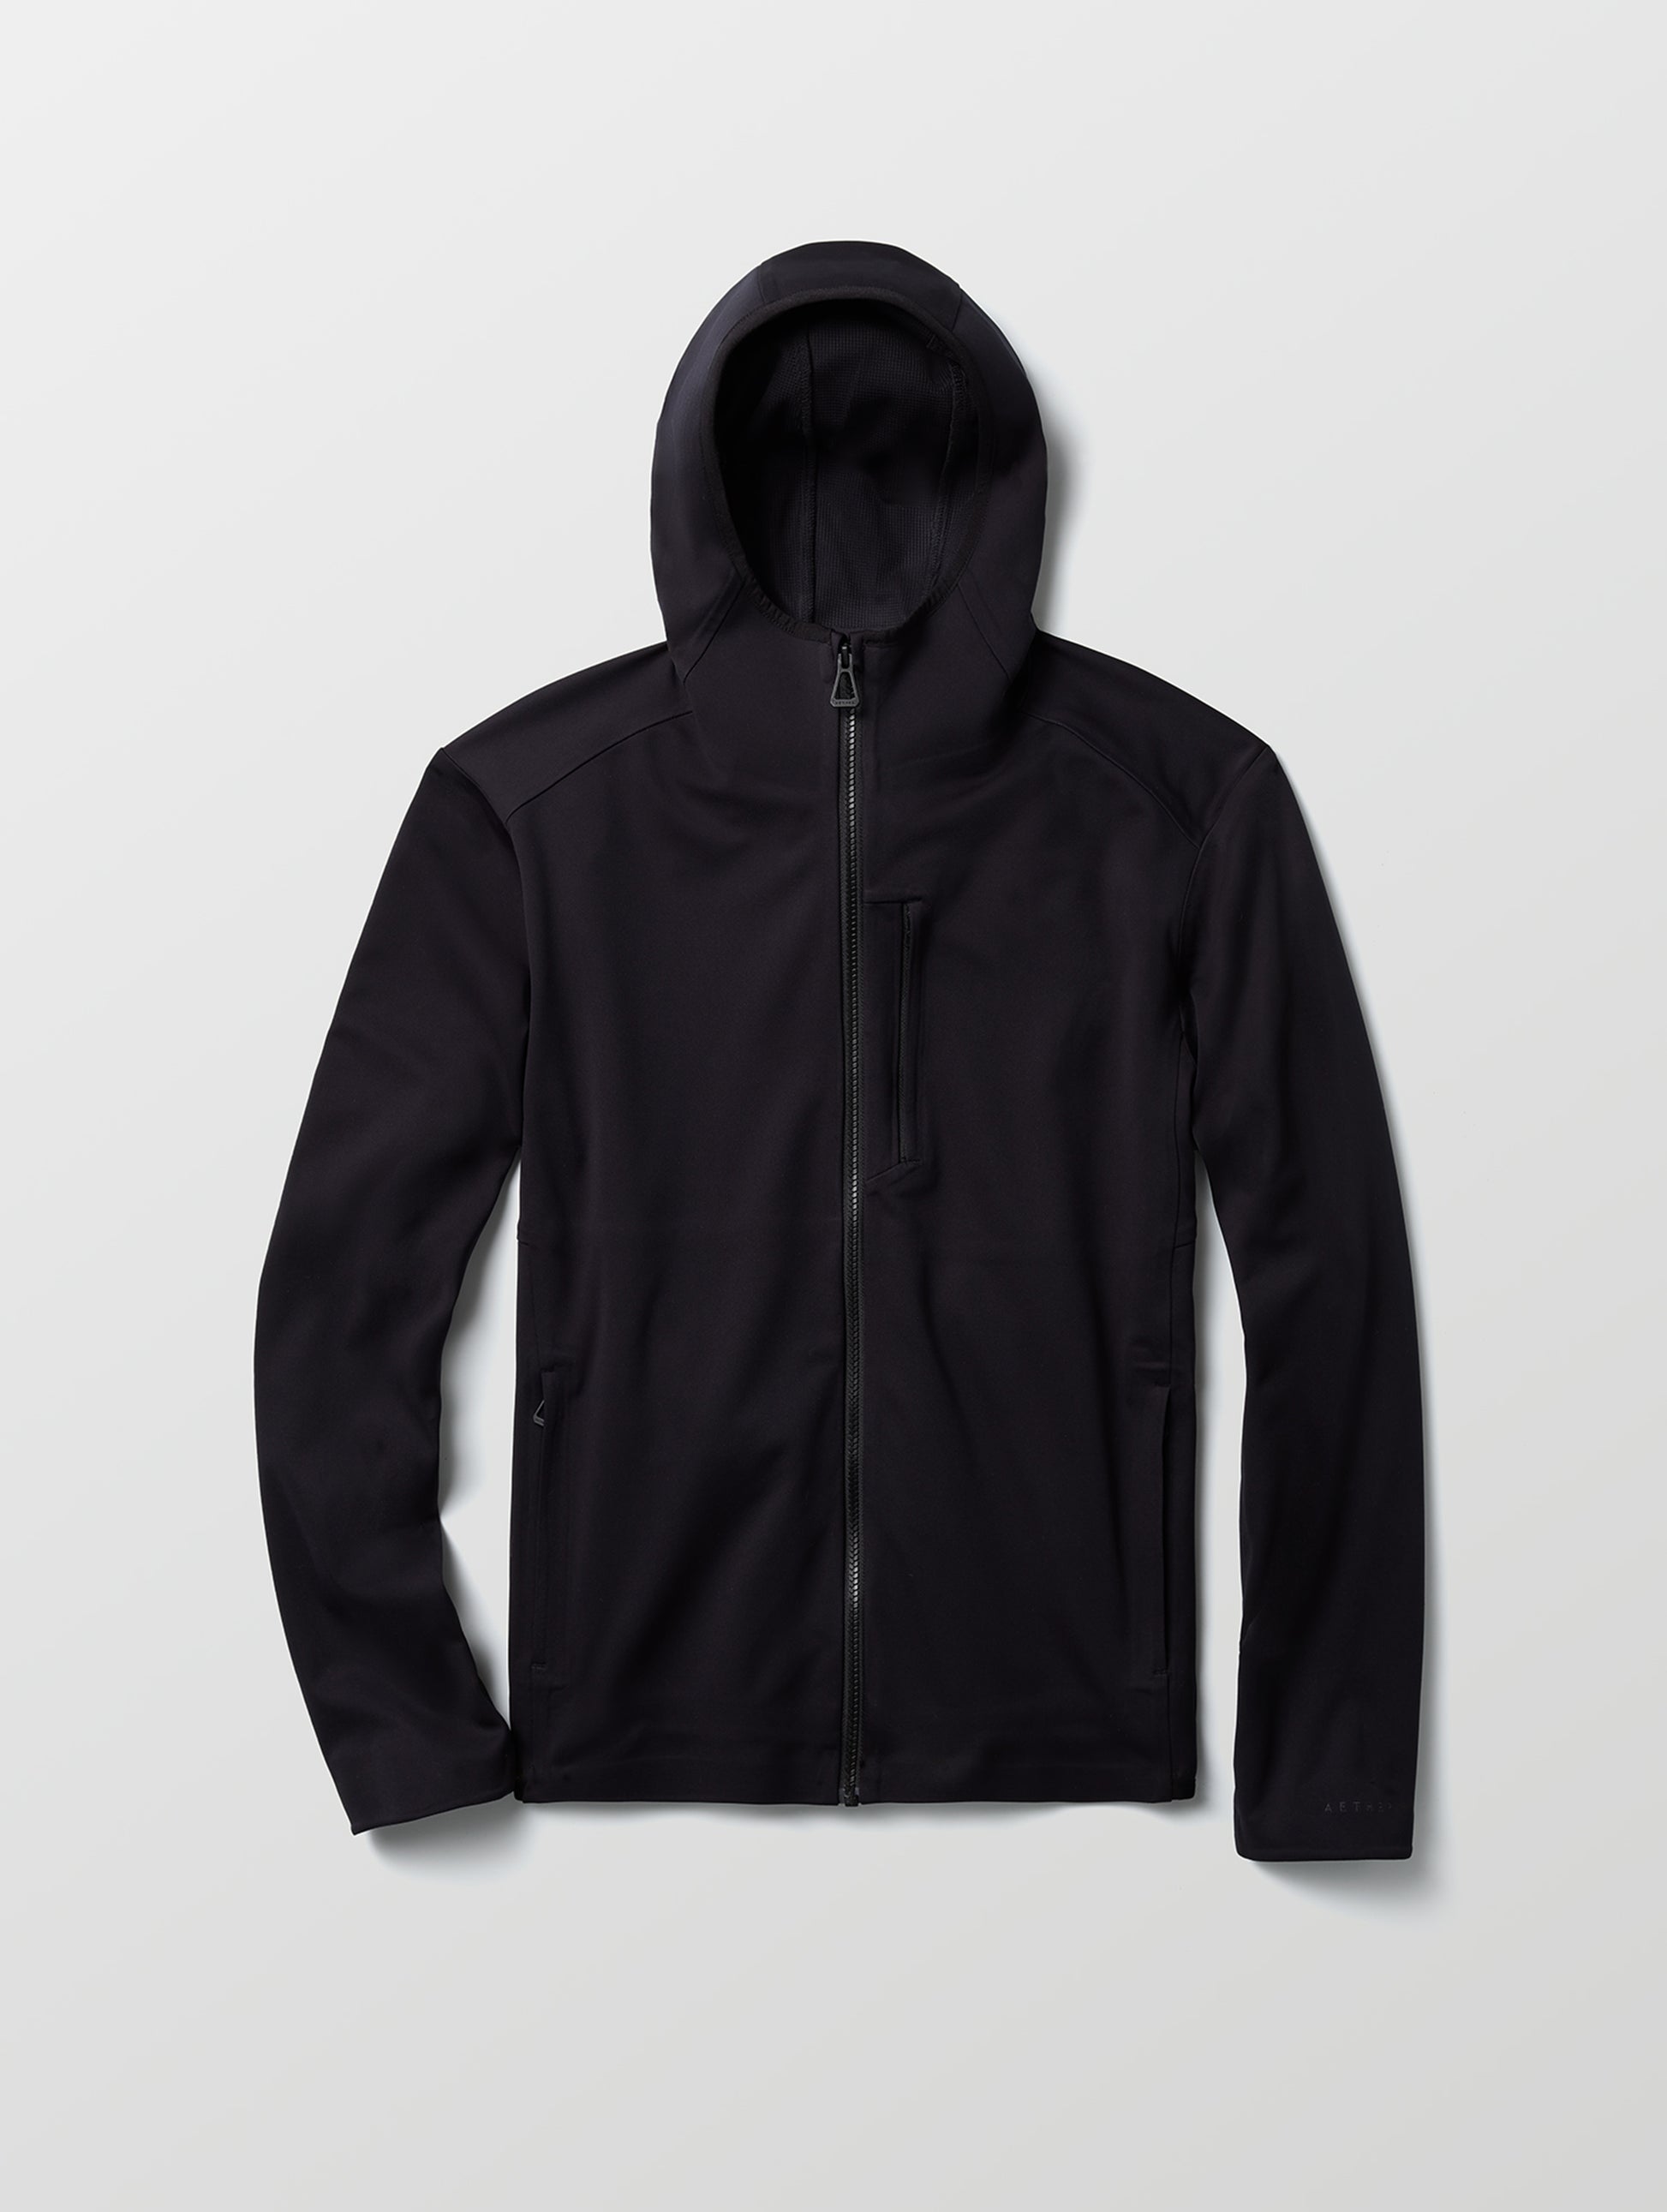 black fleece full-zip jacket from AETHER Apparel